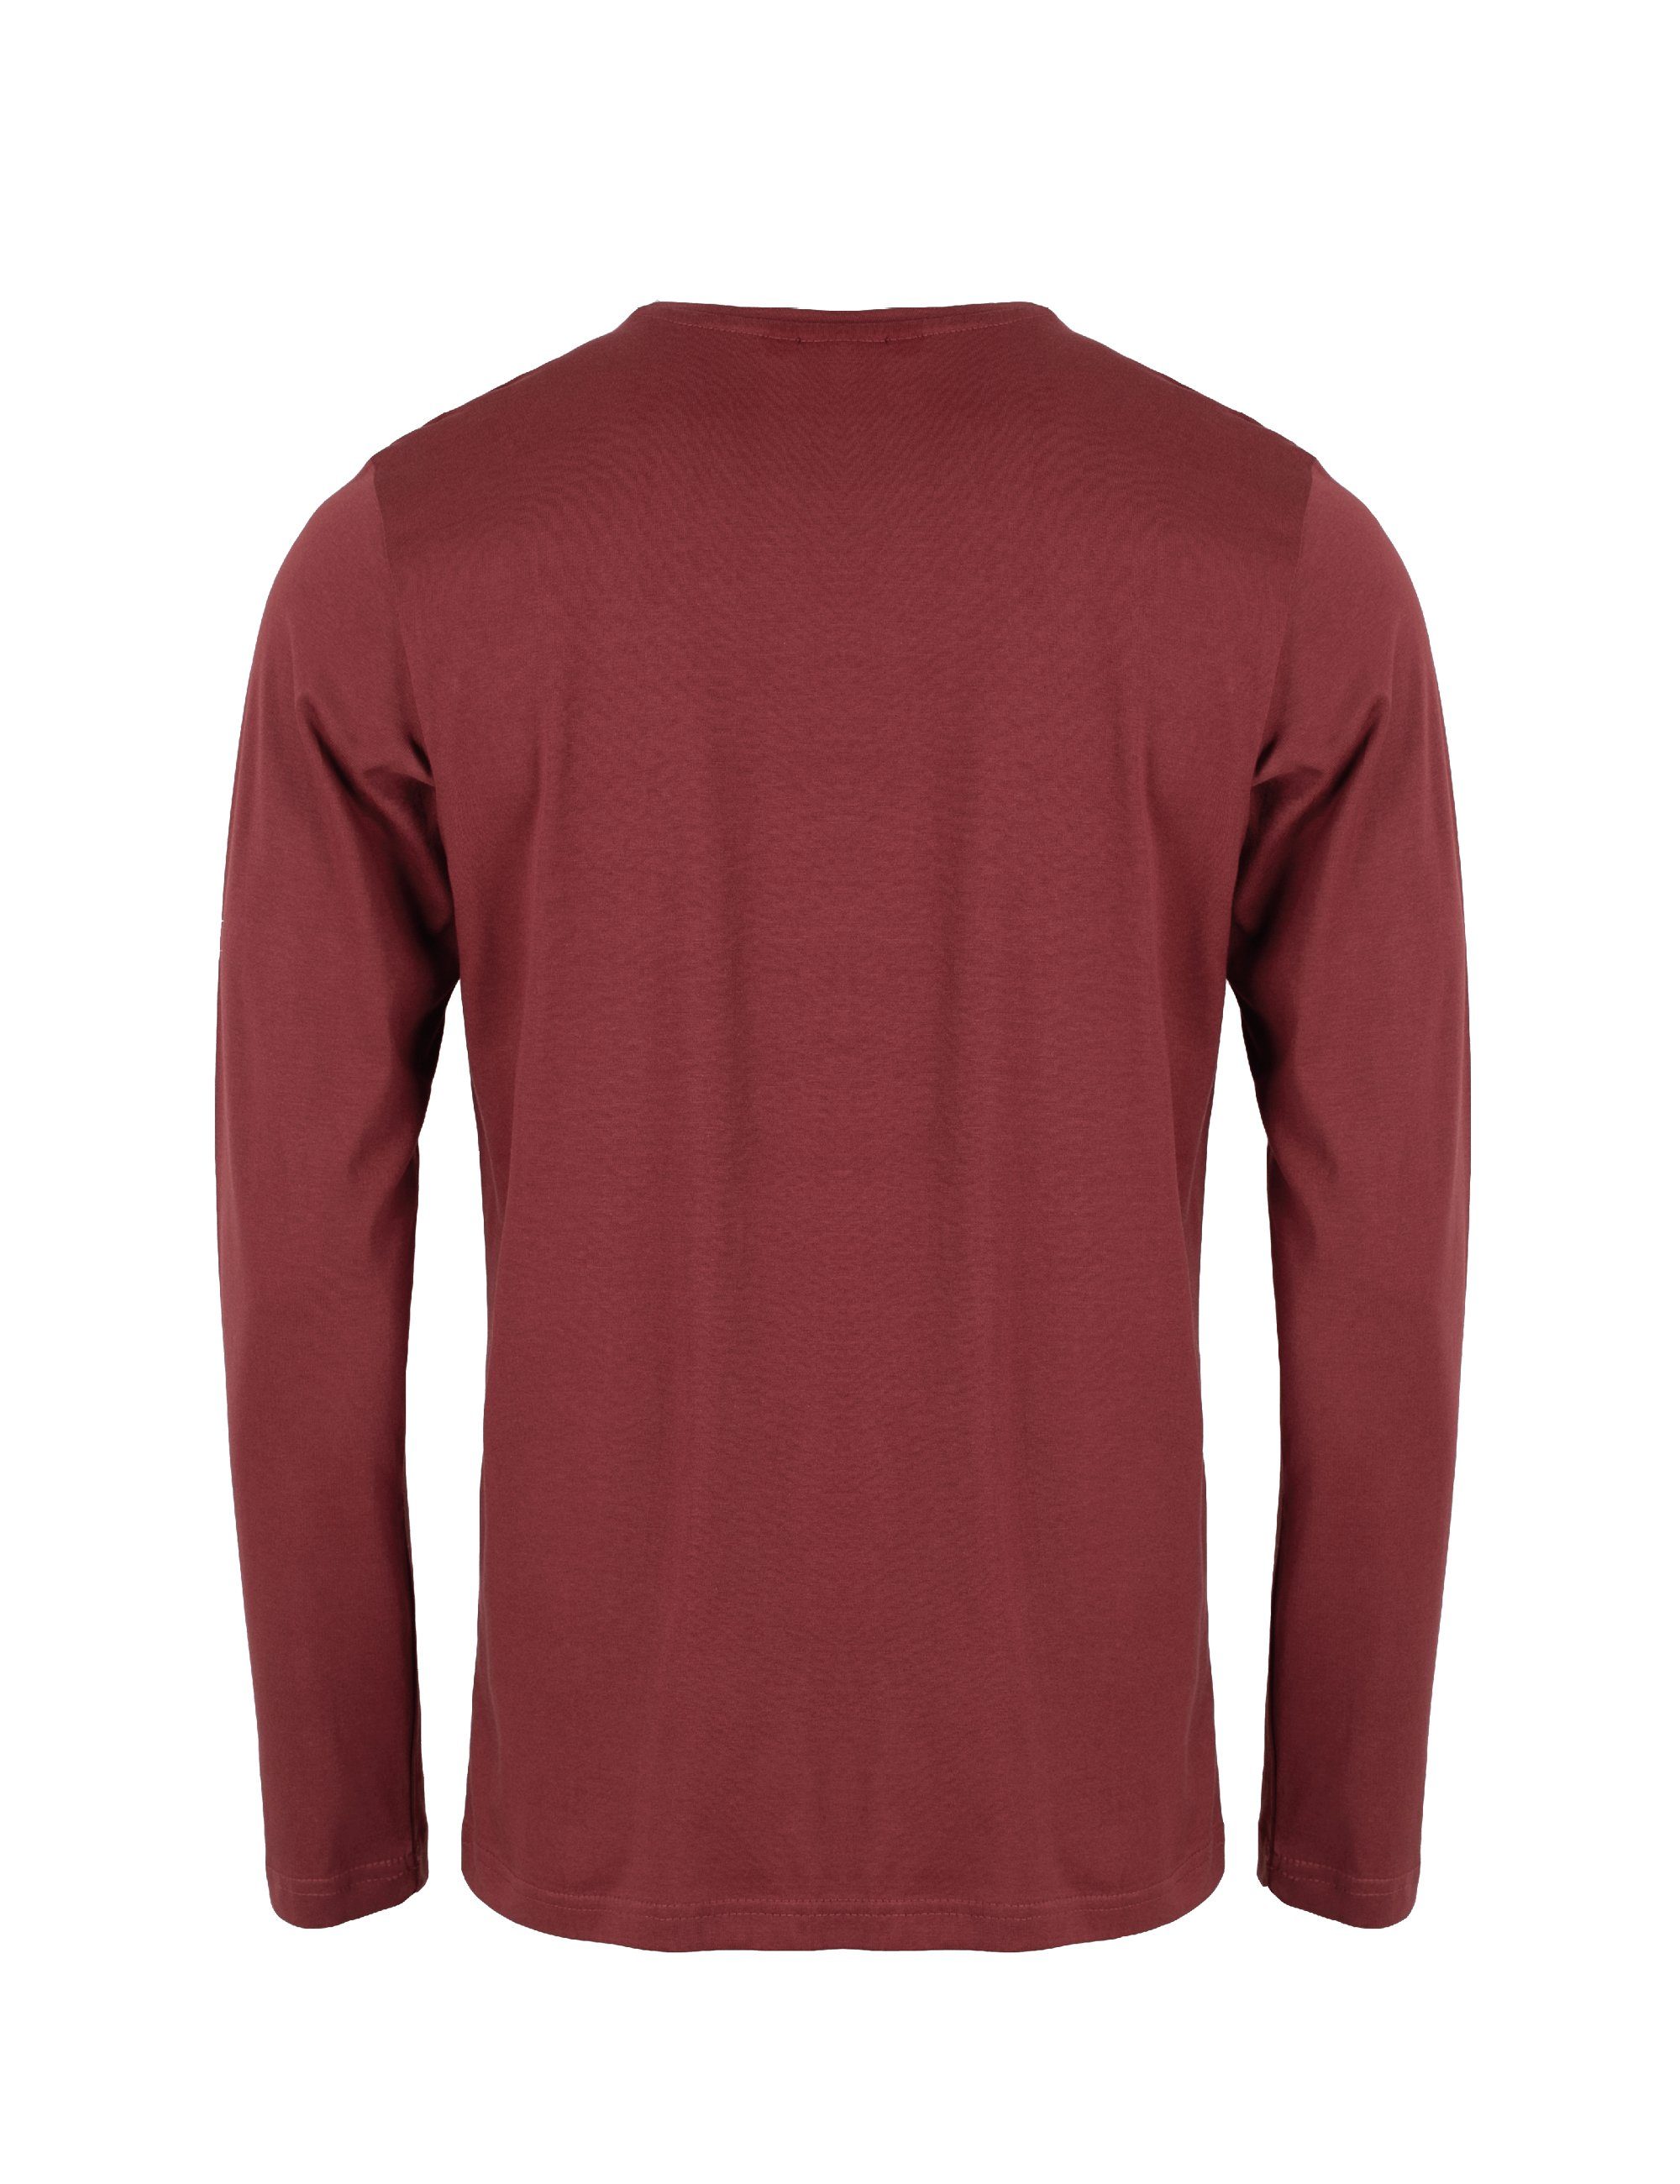 Aufdruck 1-tlg) Rot Baumwolle Rundhalsausschnitt, Tennet 100% Langarmshirt mit "Mount australia Tennet", ROADSIGN (1,